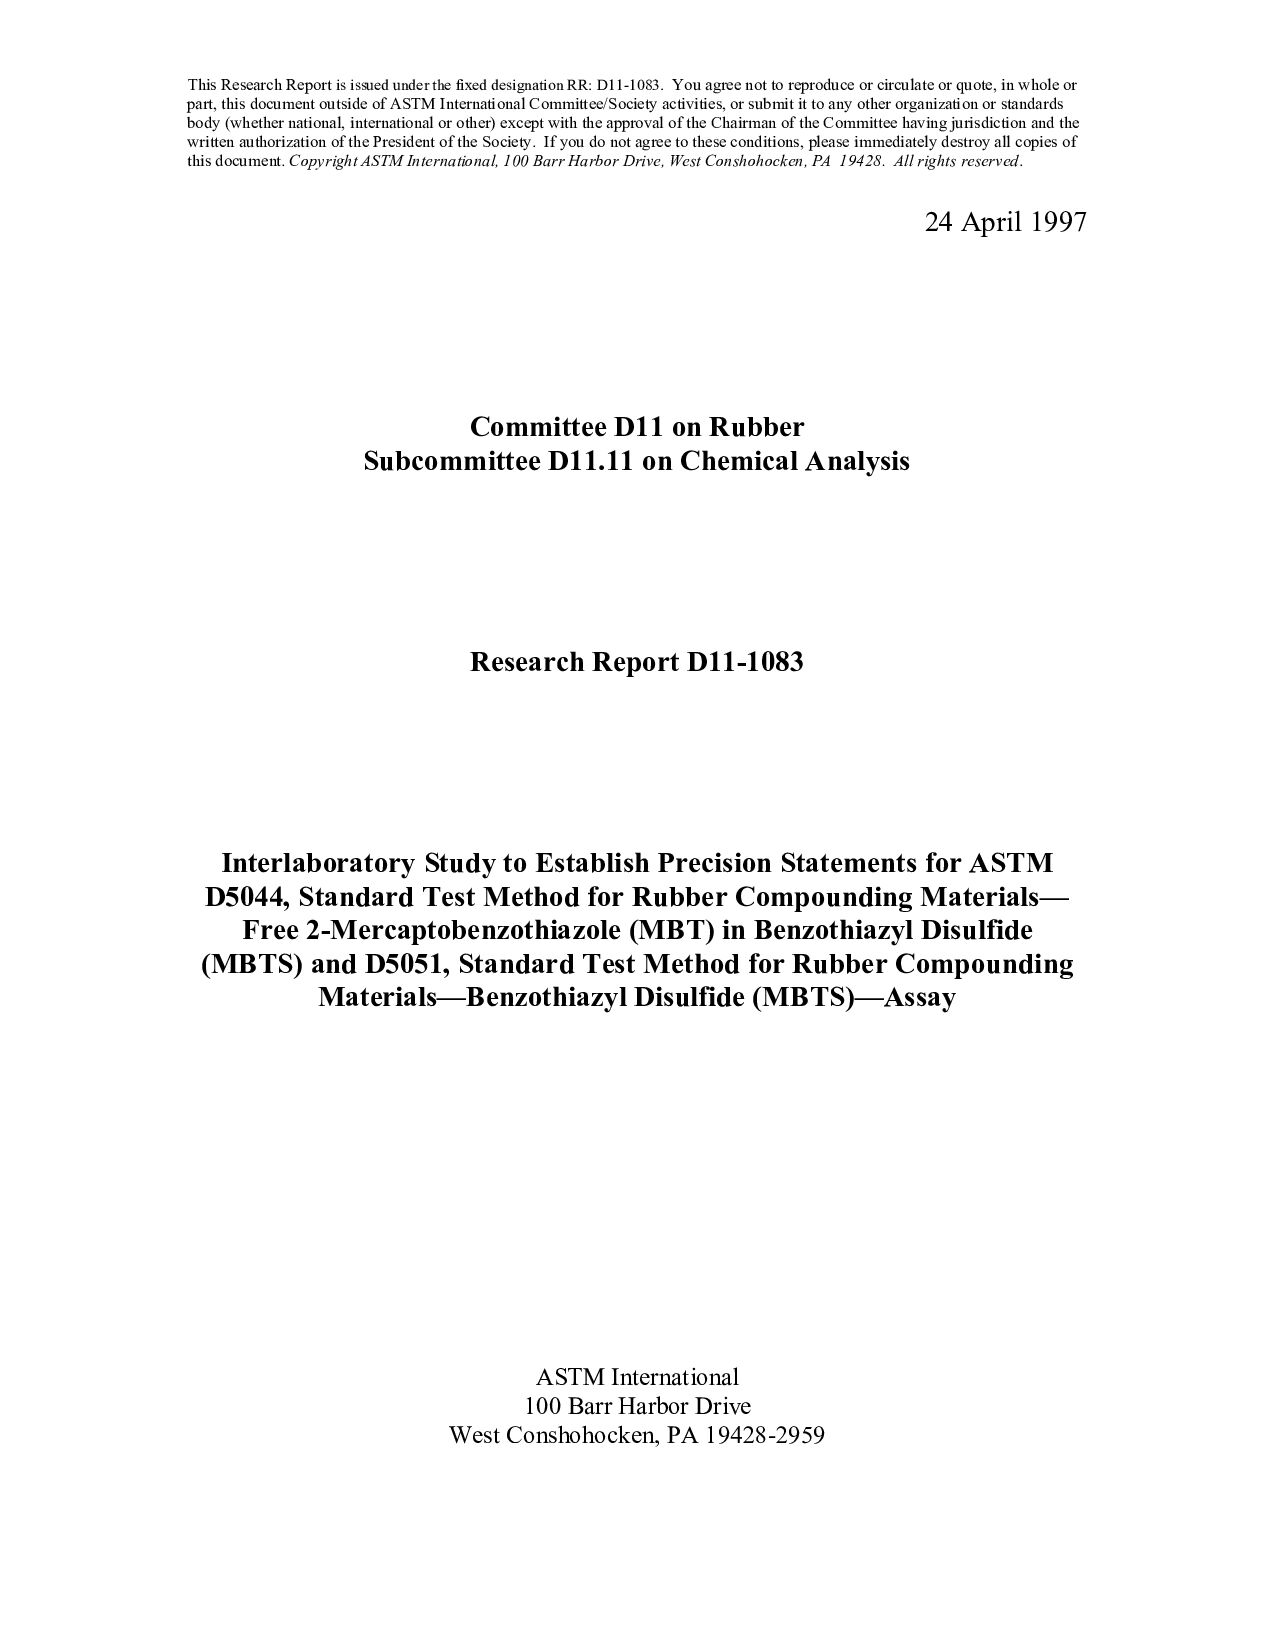 ASTM RR-D11-1083 1997封面图